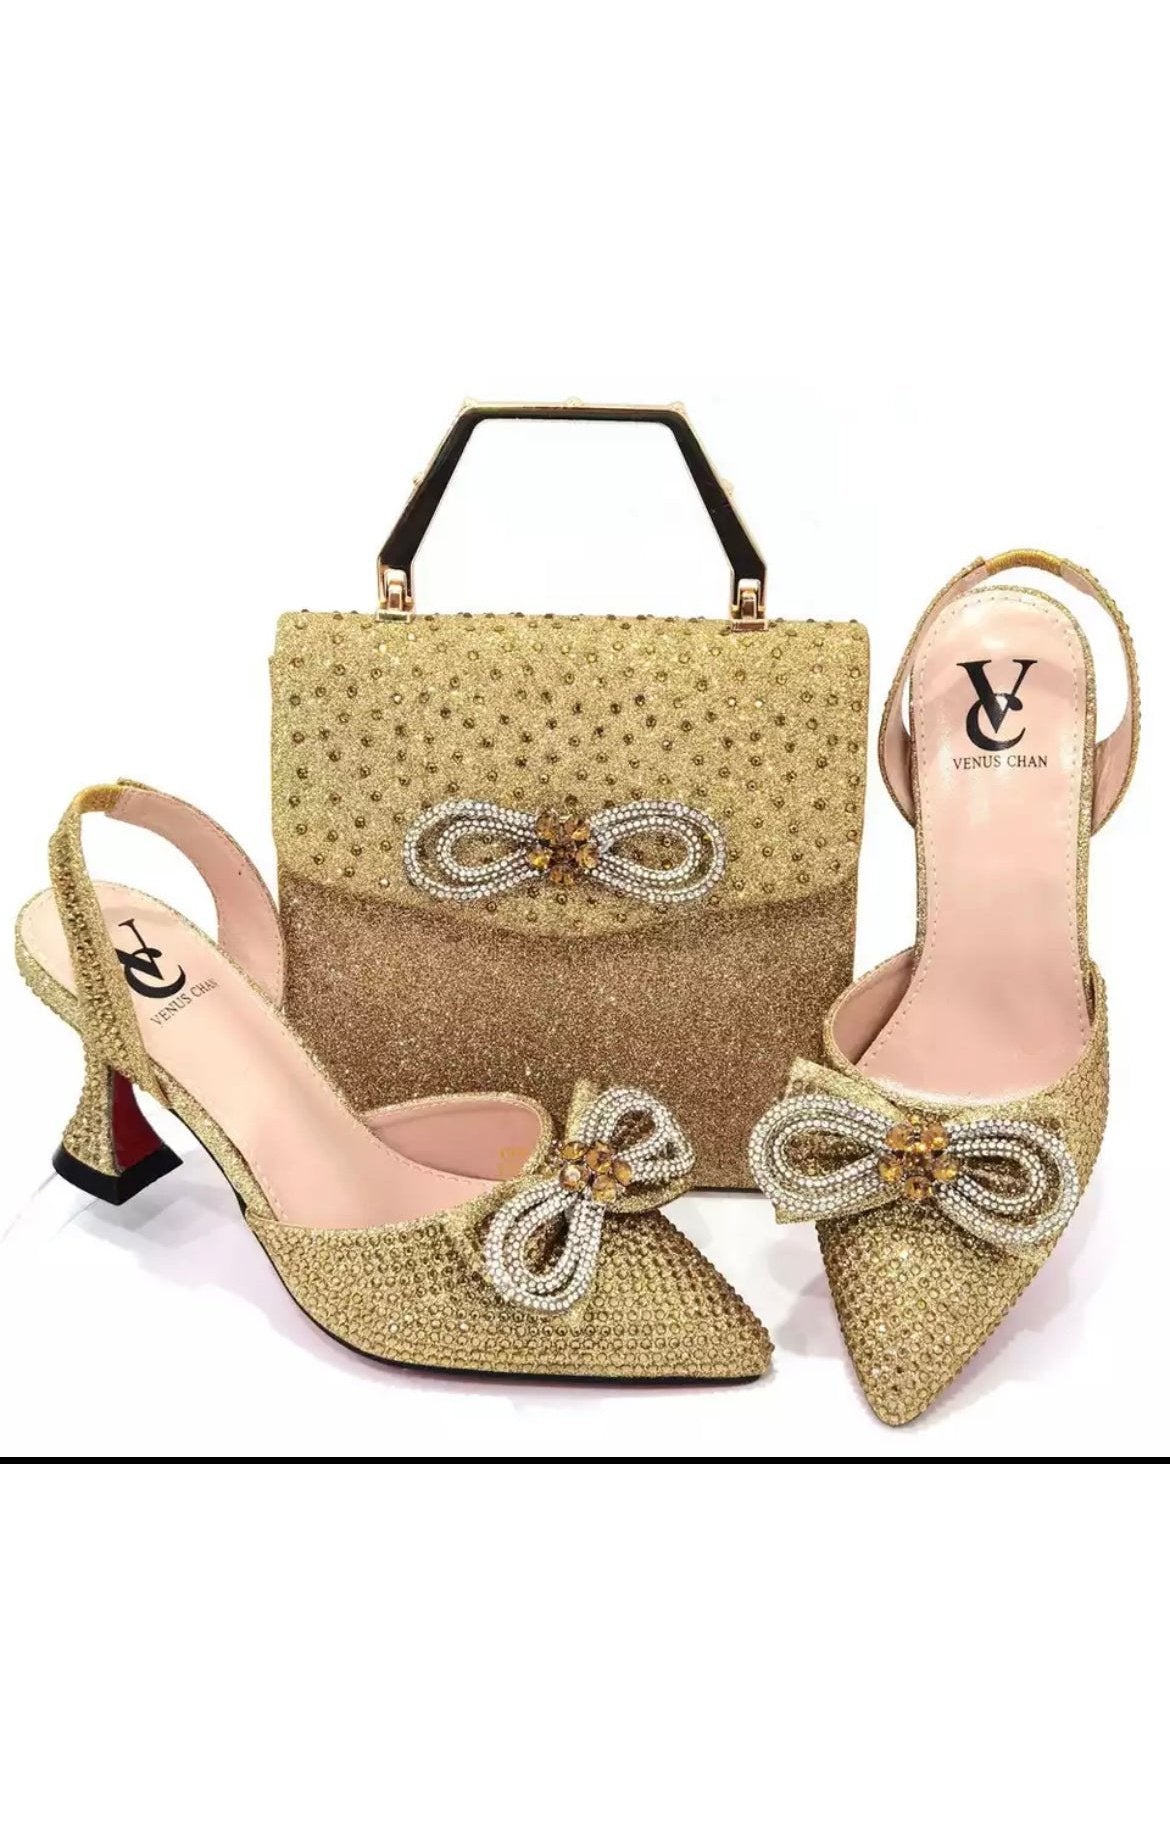 Matching purse bag set Sling Heel (Many Colors)